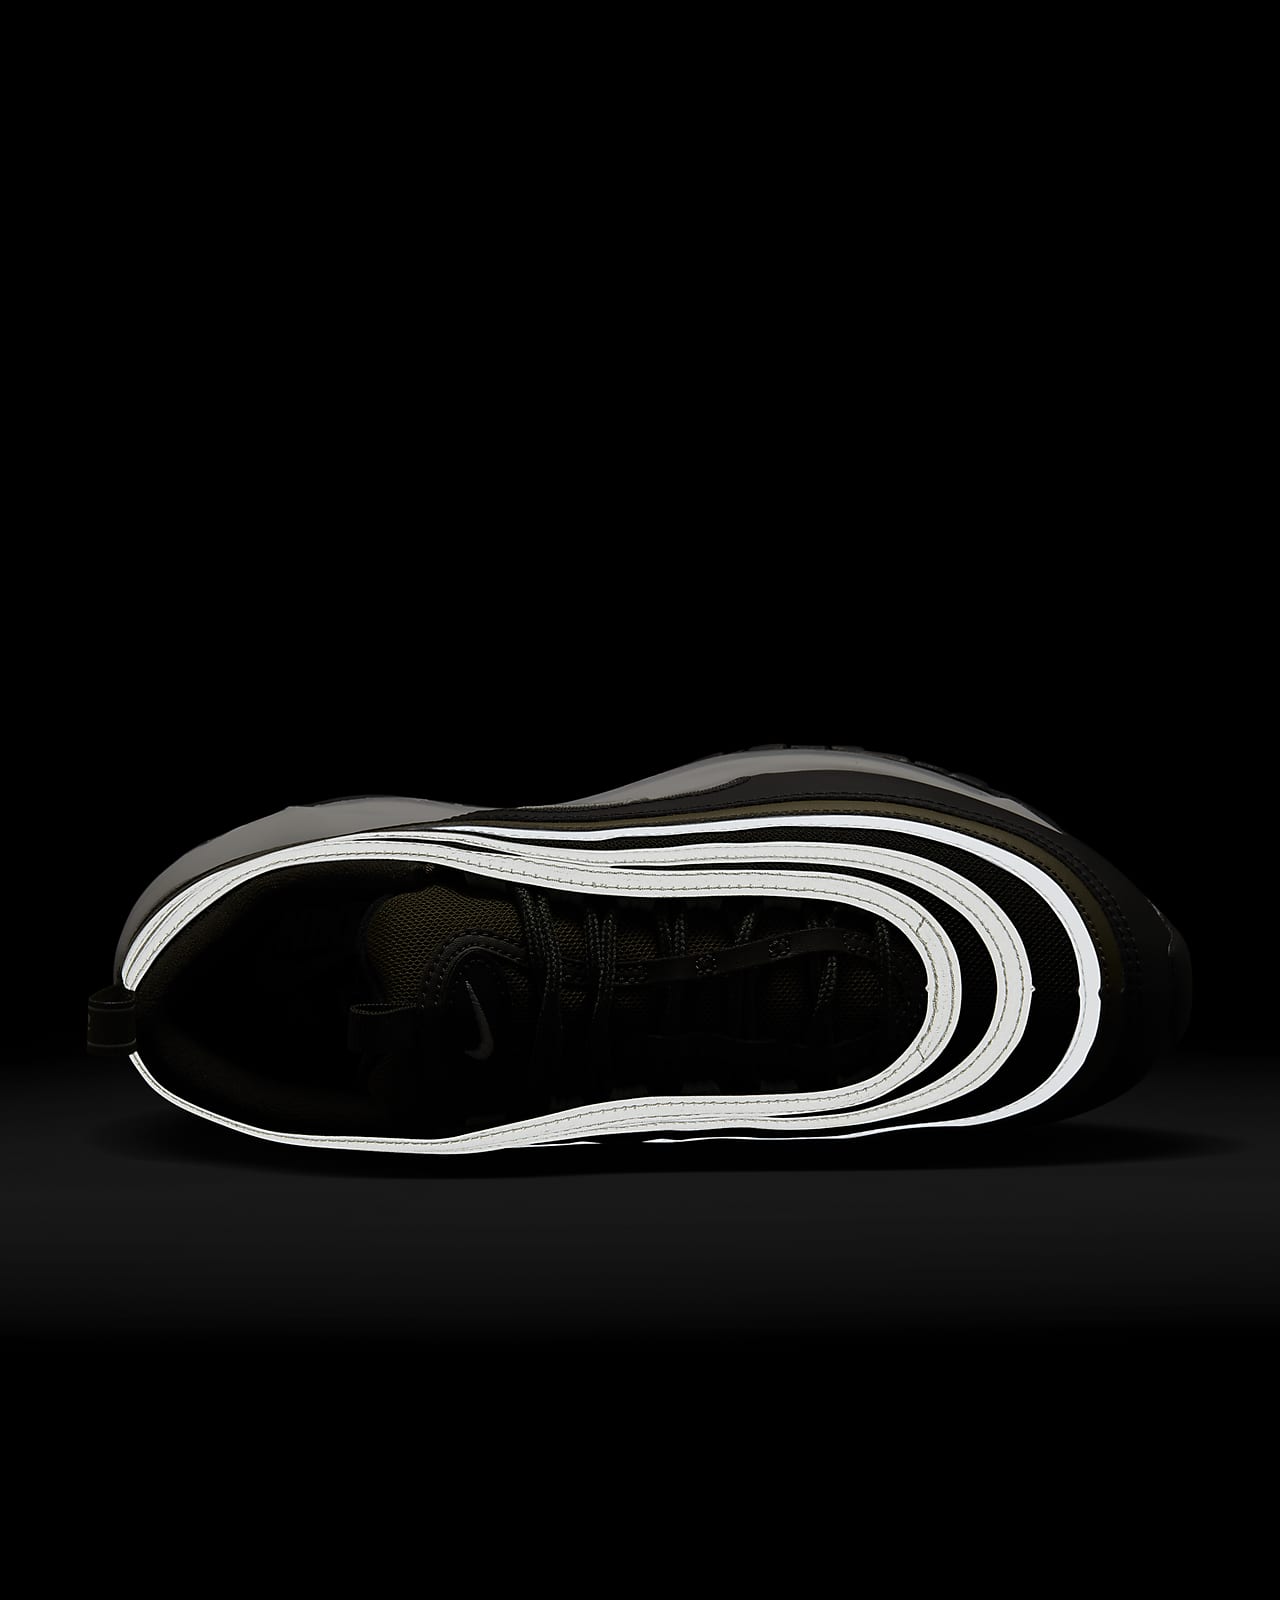 Nike Air Max 97 Triple Black On Feet! 